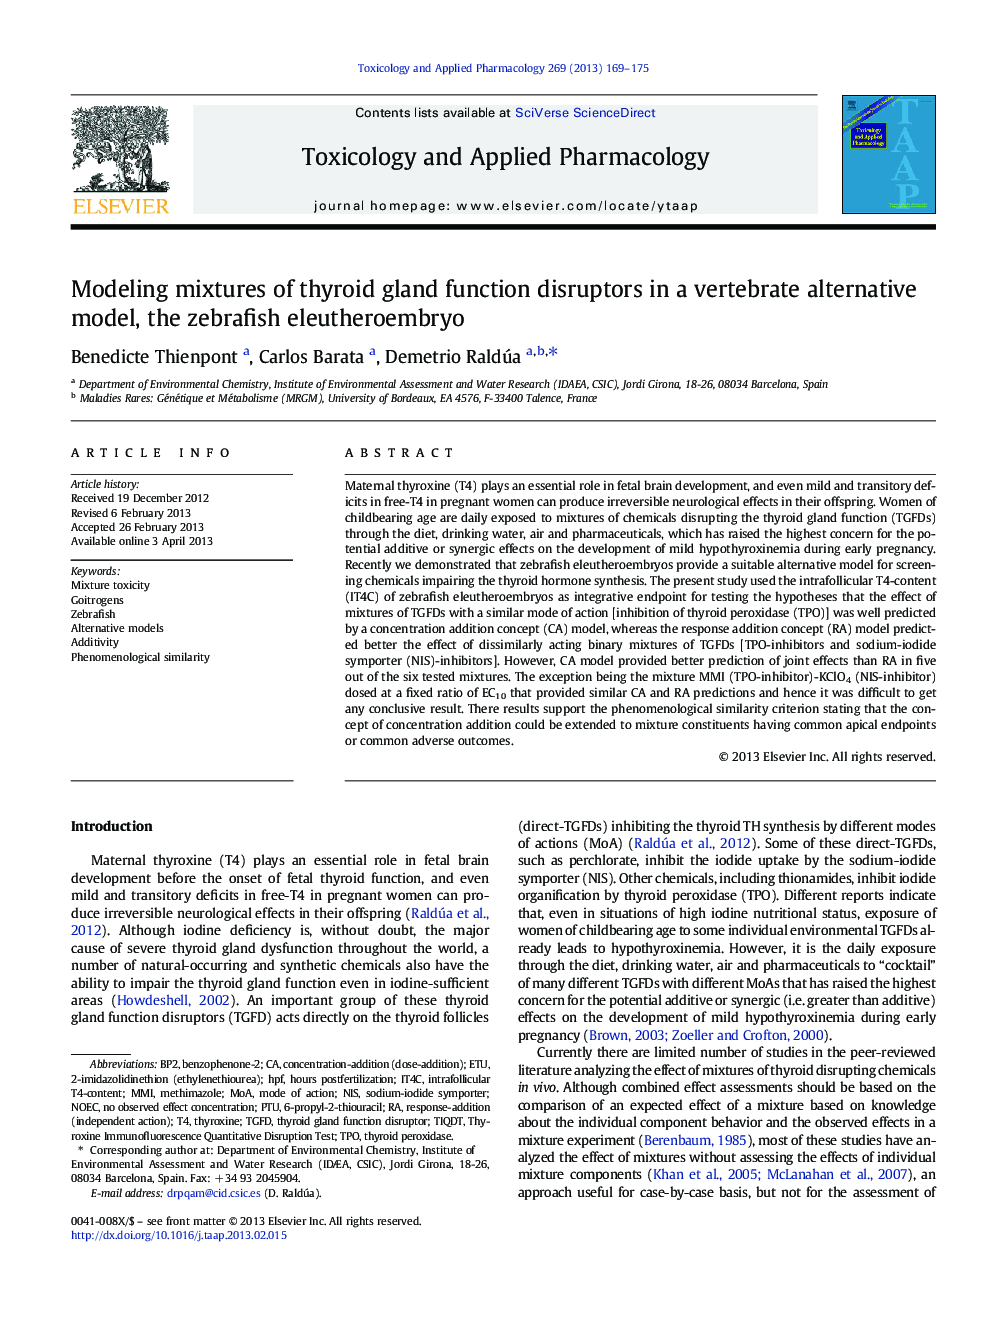 Modeling mixtures of thyroid gland function disruptors in a vertebrate alternative model, the zebrafish eleutheroembryo